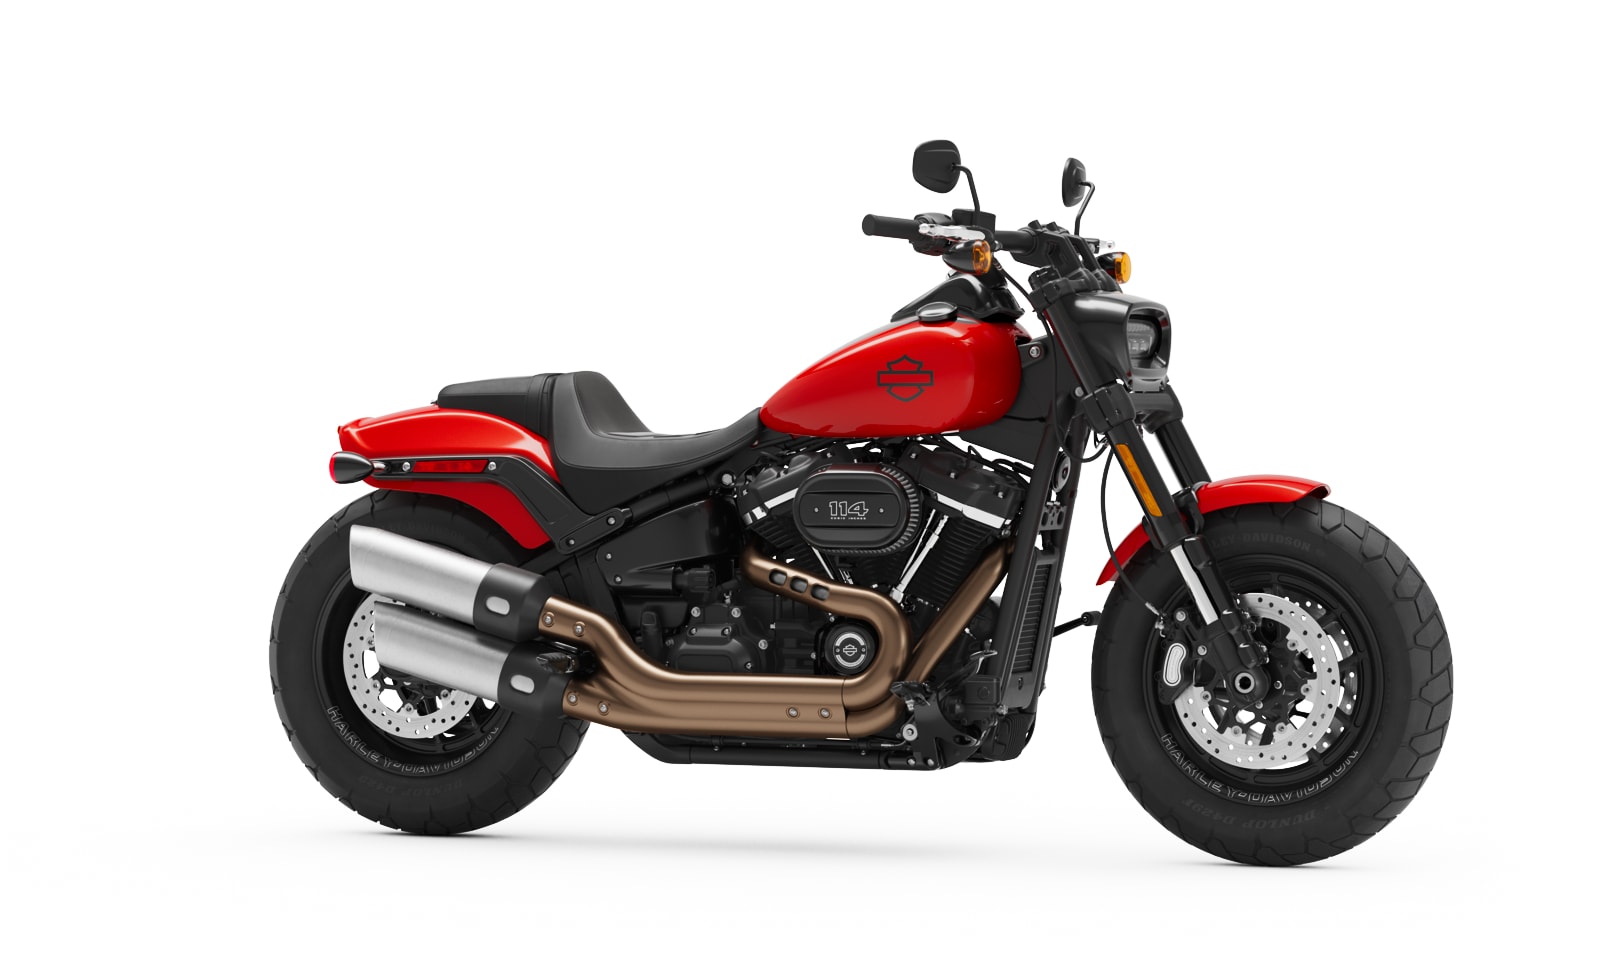 Harley Davidson 2021 In Pakistan All Bike Models With Details Revealed